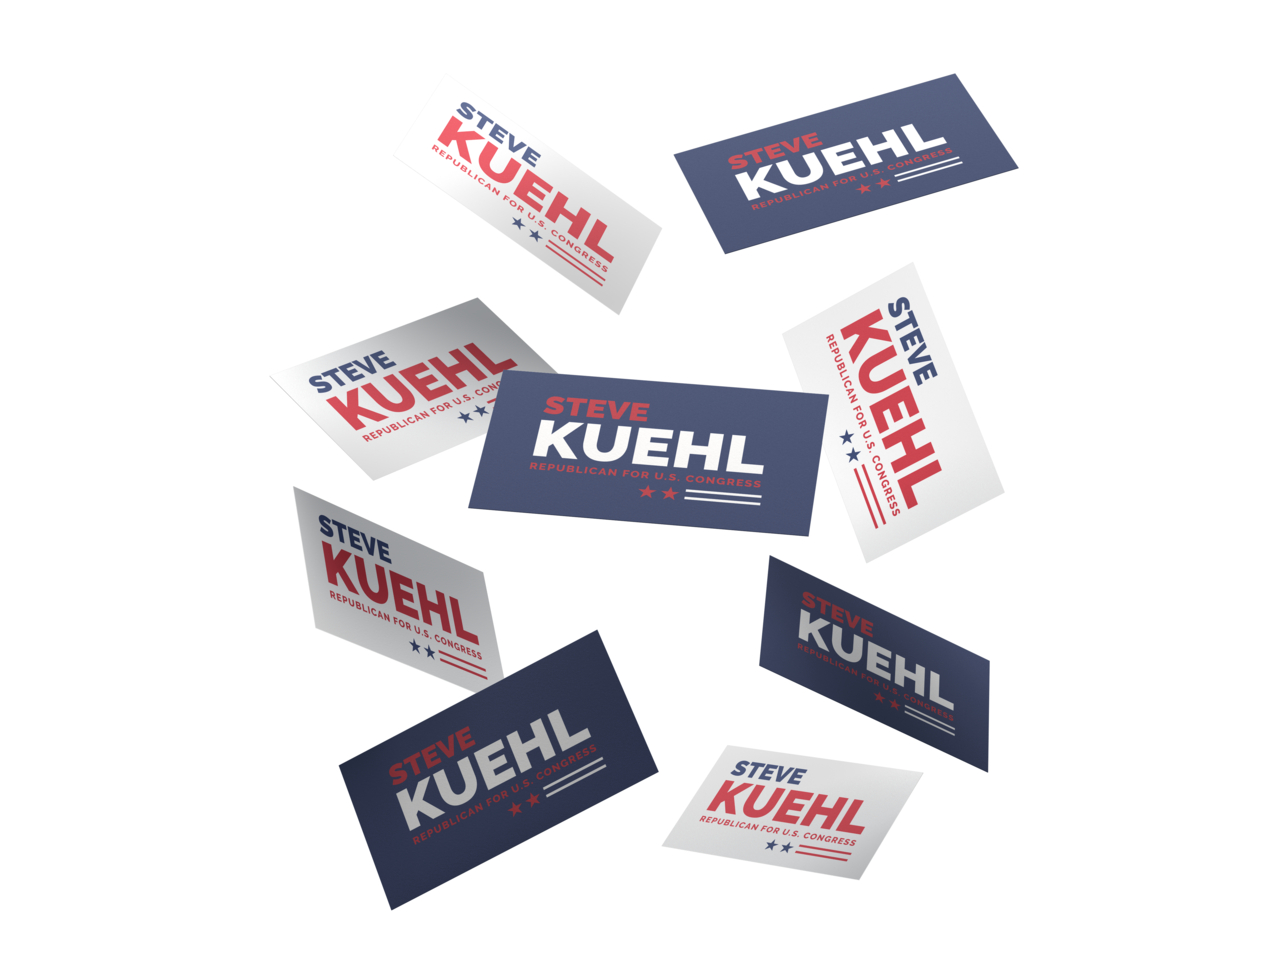 Steve Kuehl for U.S. Congress